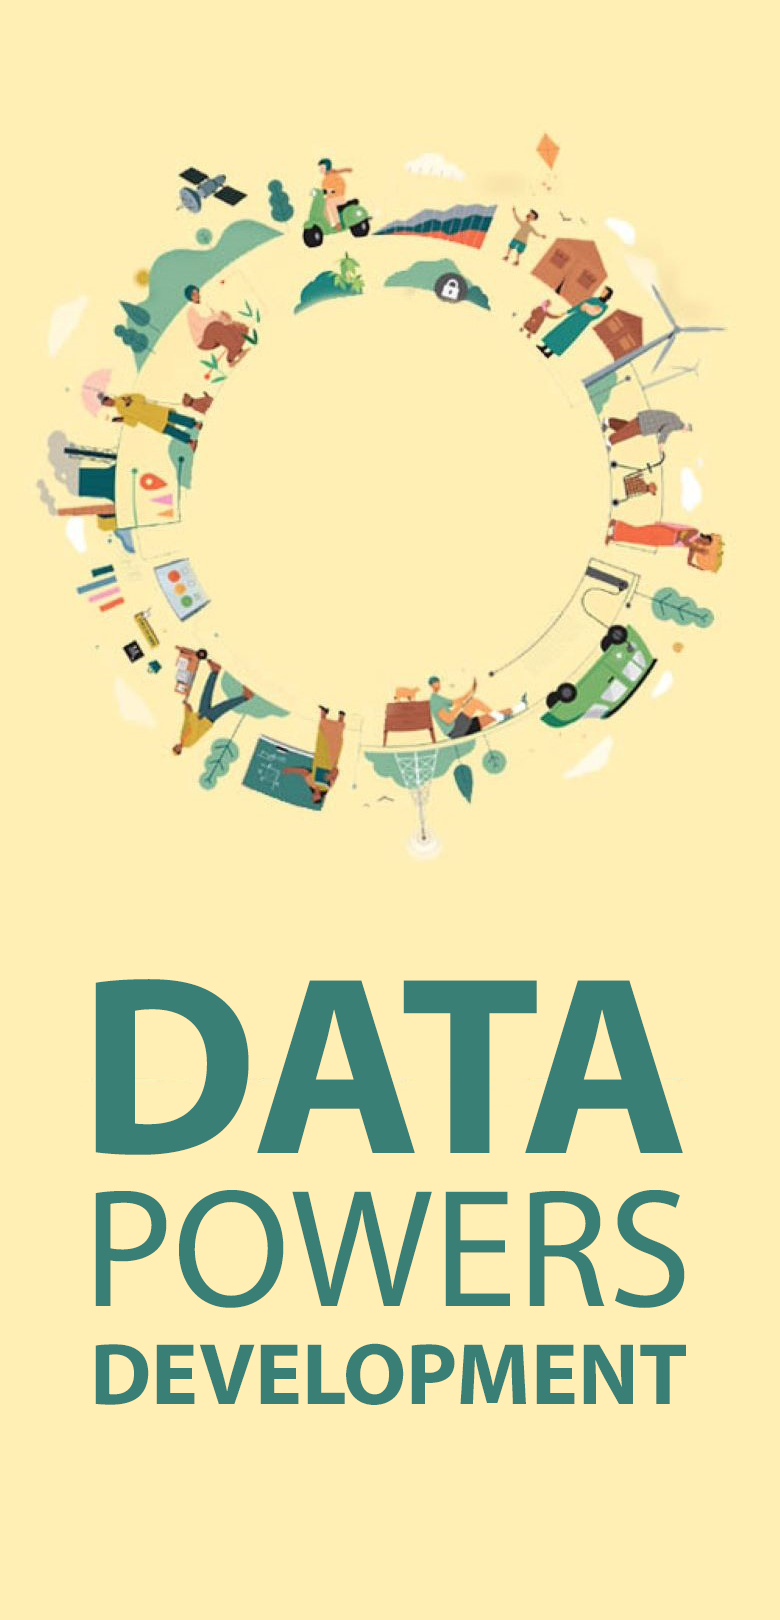 "Data powers development" banner image